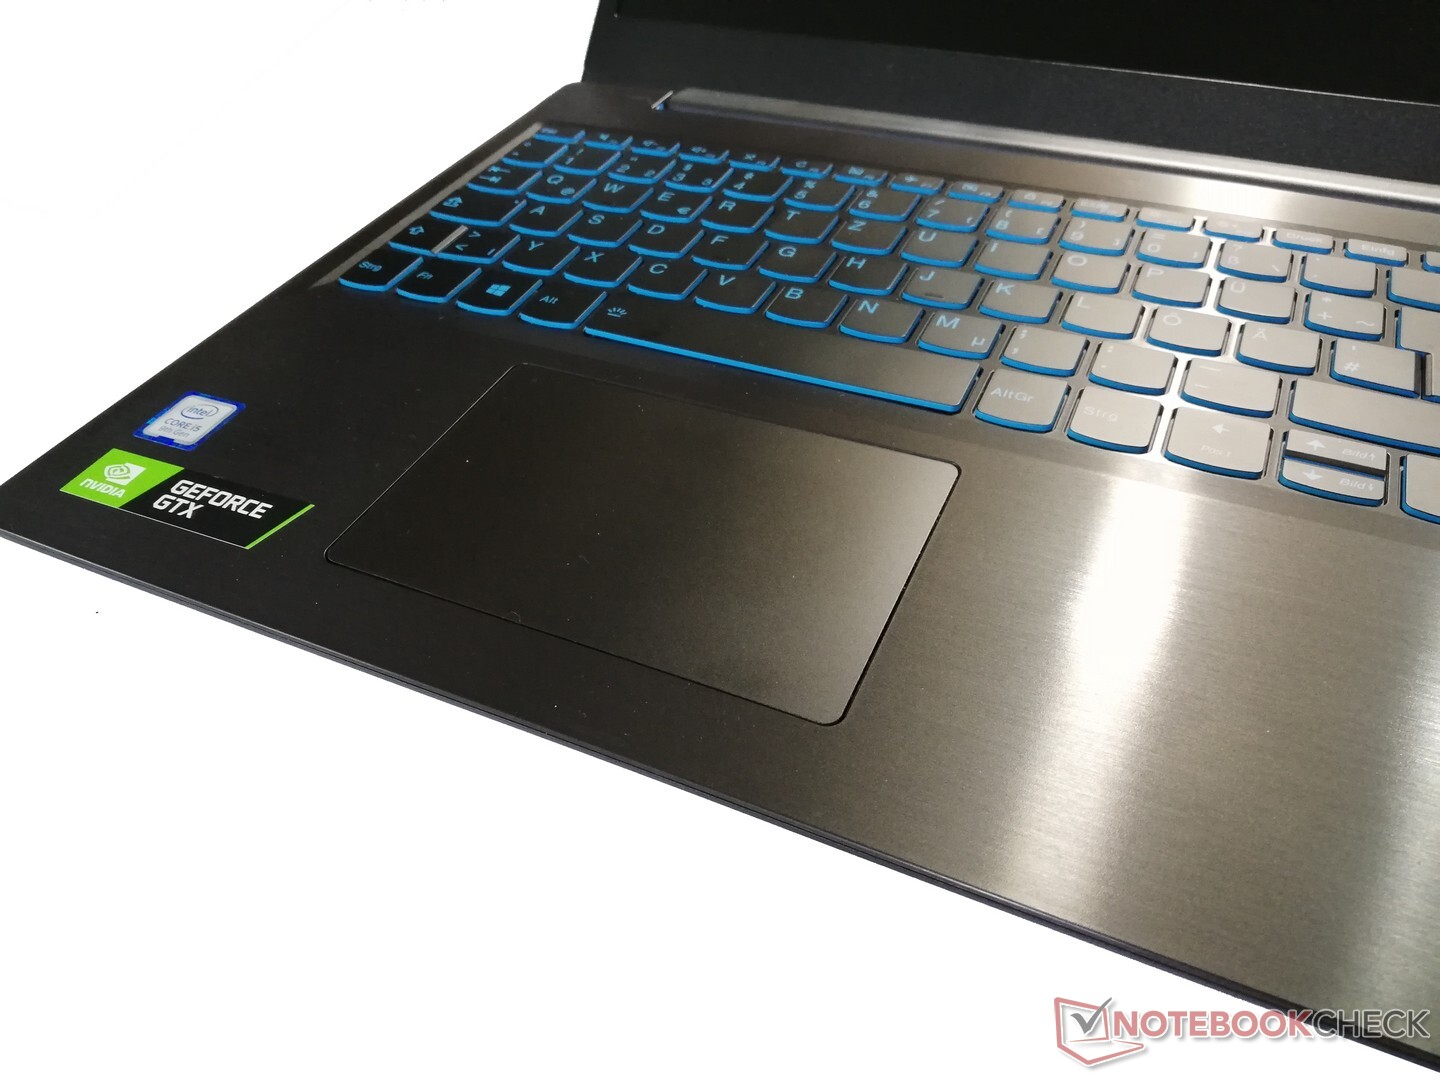 Lenovo IdeaPad Gaming laptop review: Stiff ClickPad impacts gaming fun - NotebookCheck.net Reviews